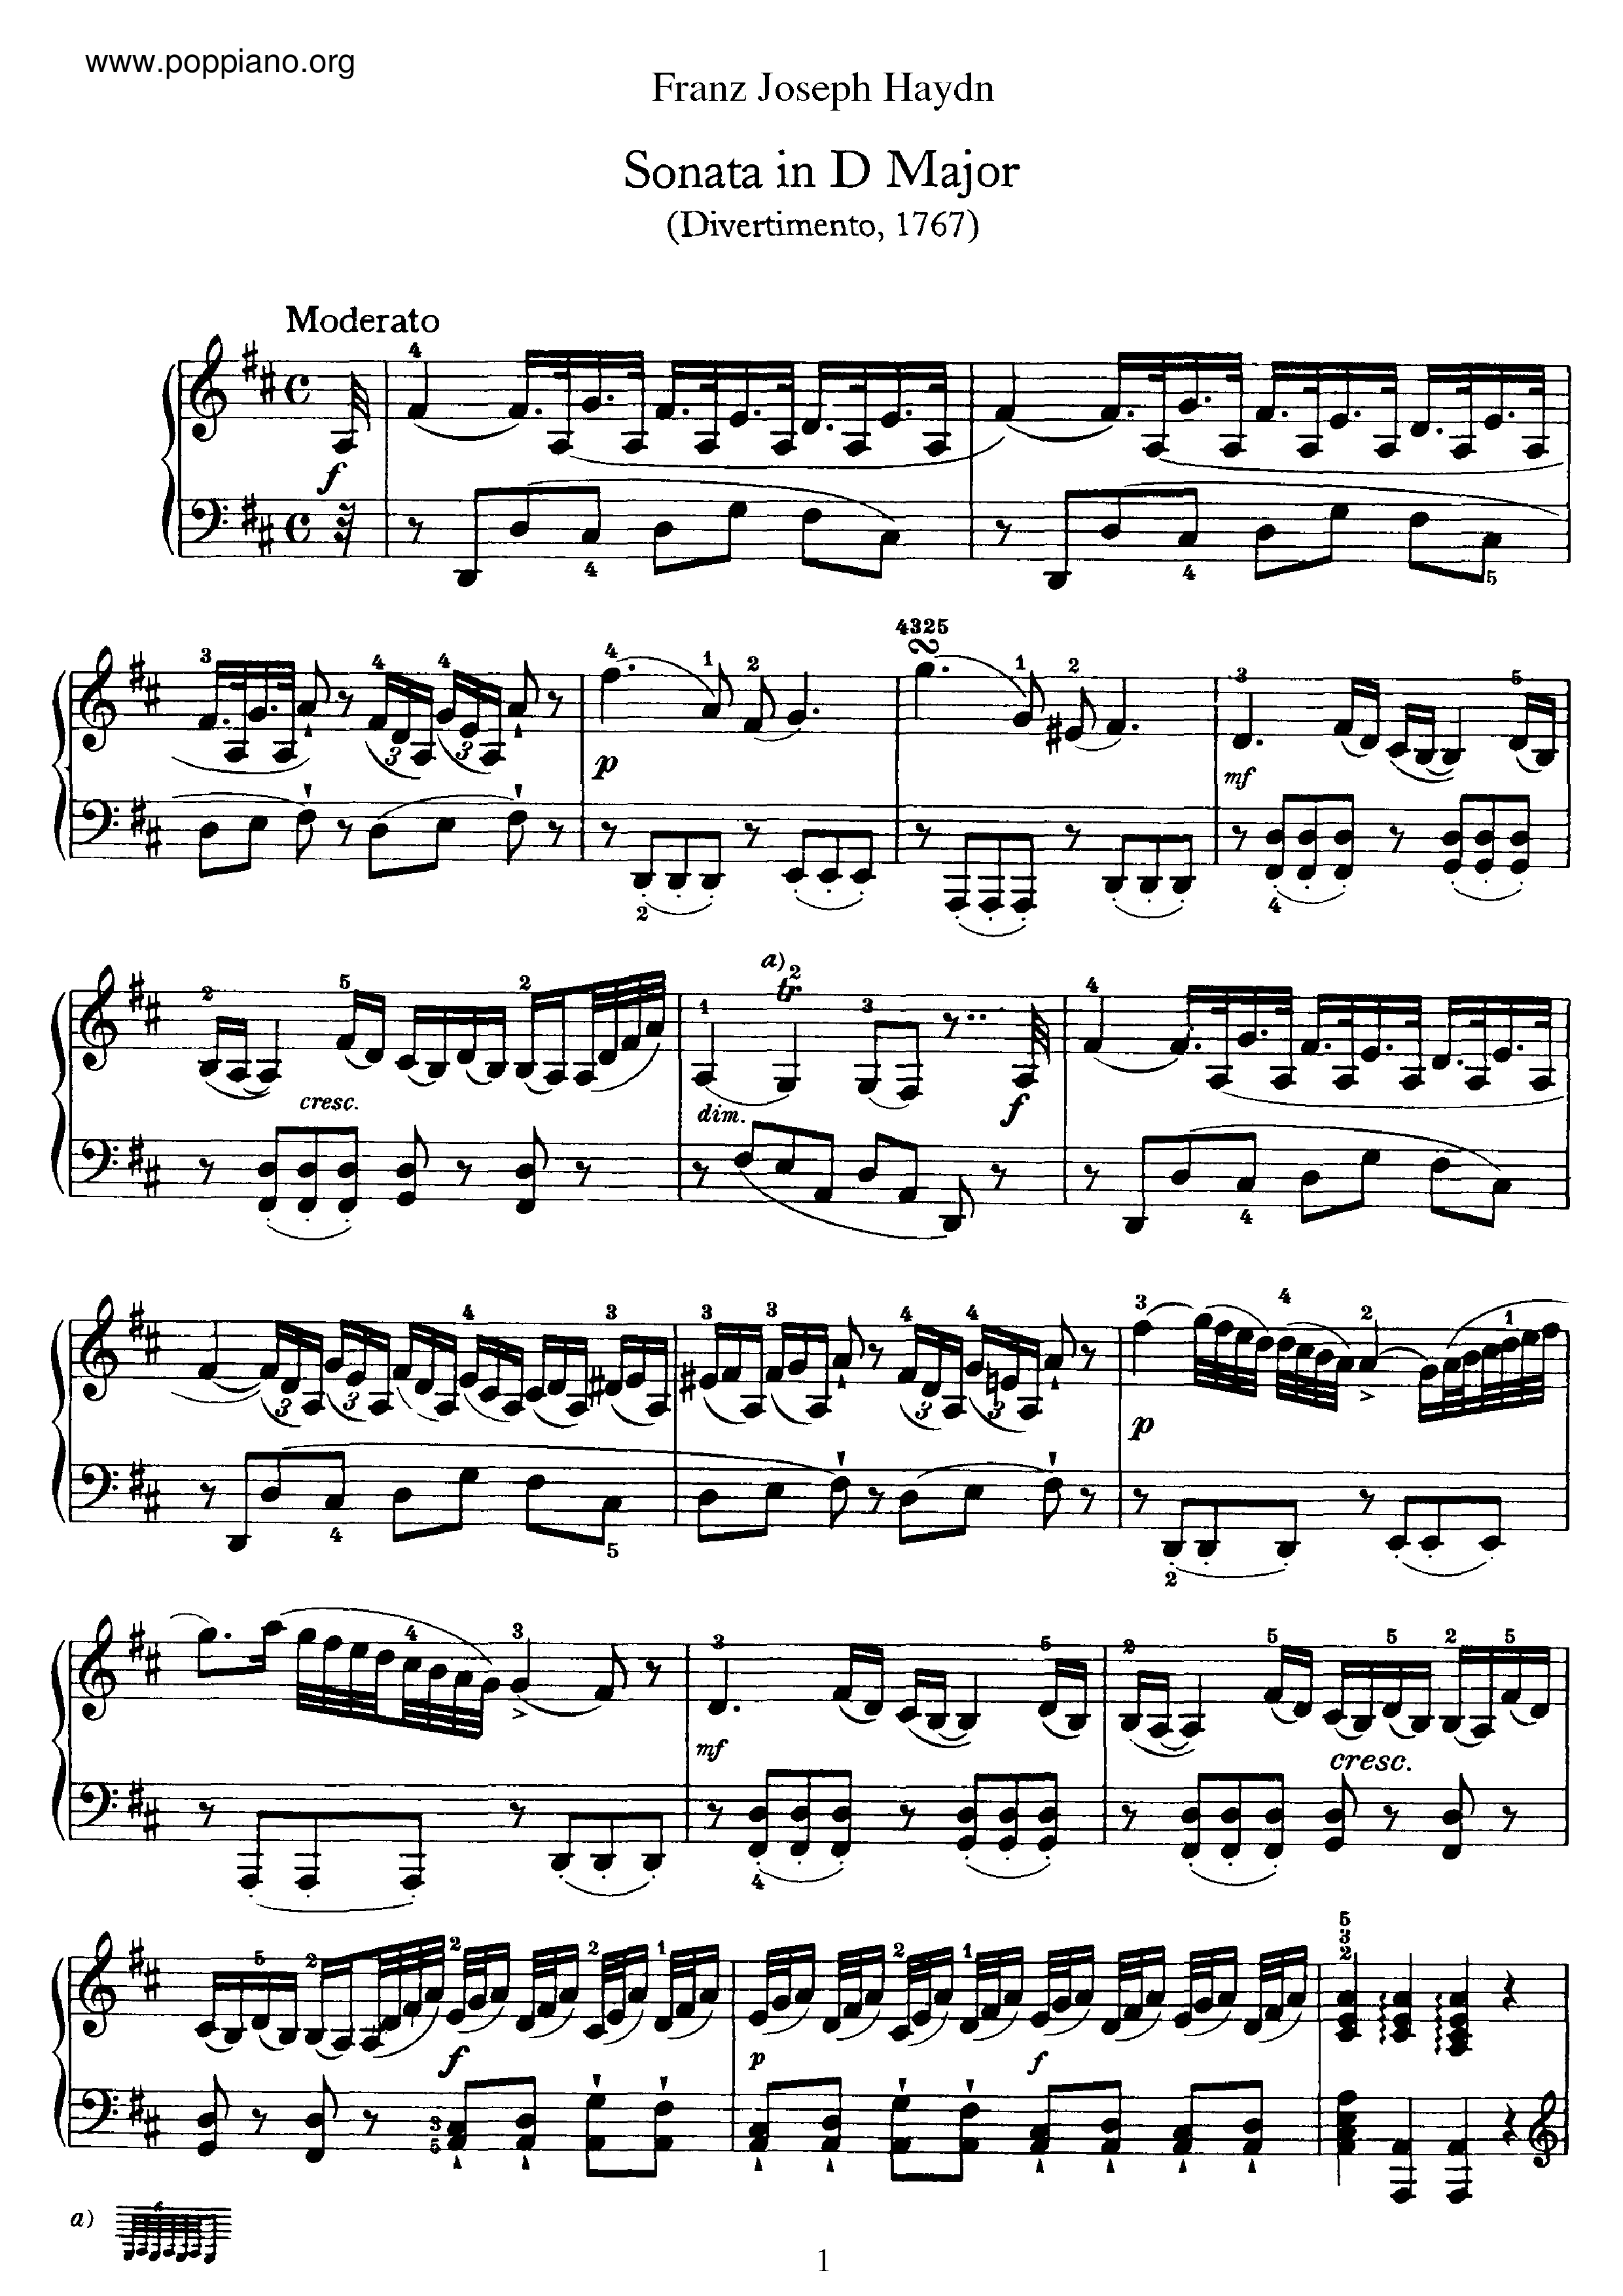 Franz Joseph Haydn-Sonata No.19 in D major 琴譜pdf-香港流行鋼琴協會琴譜下載 ★